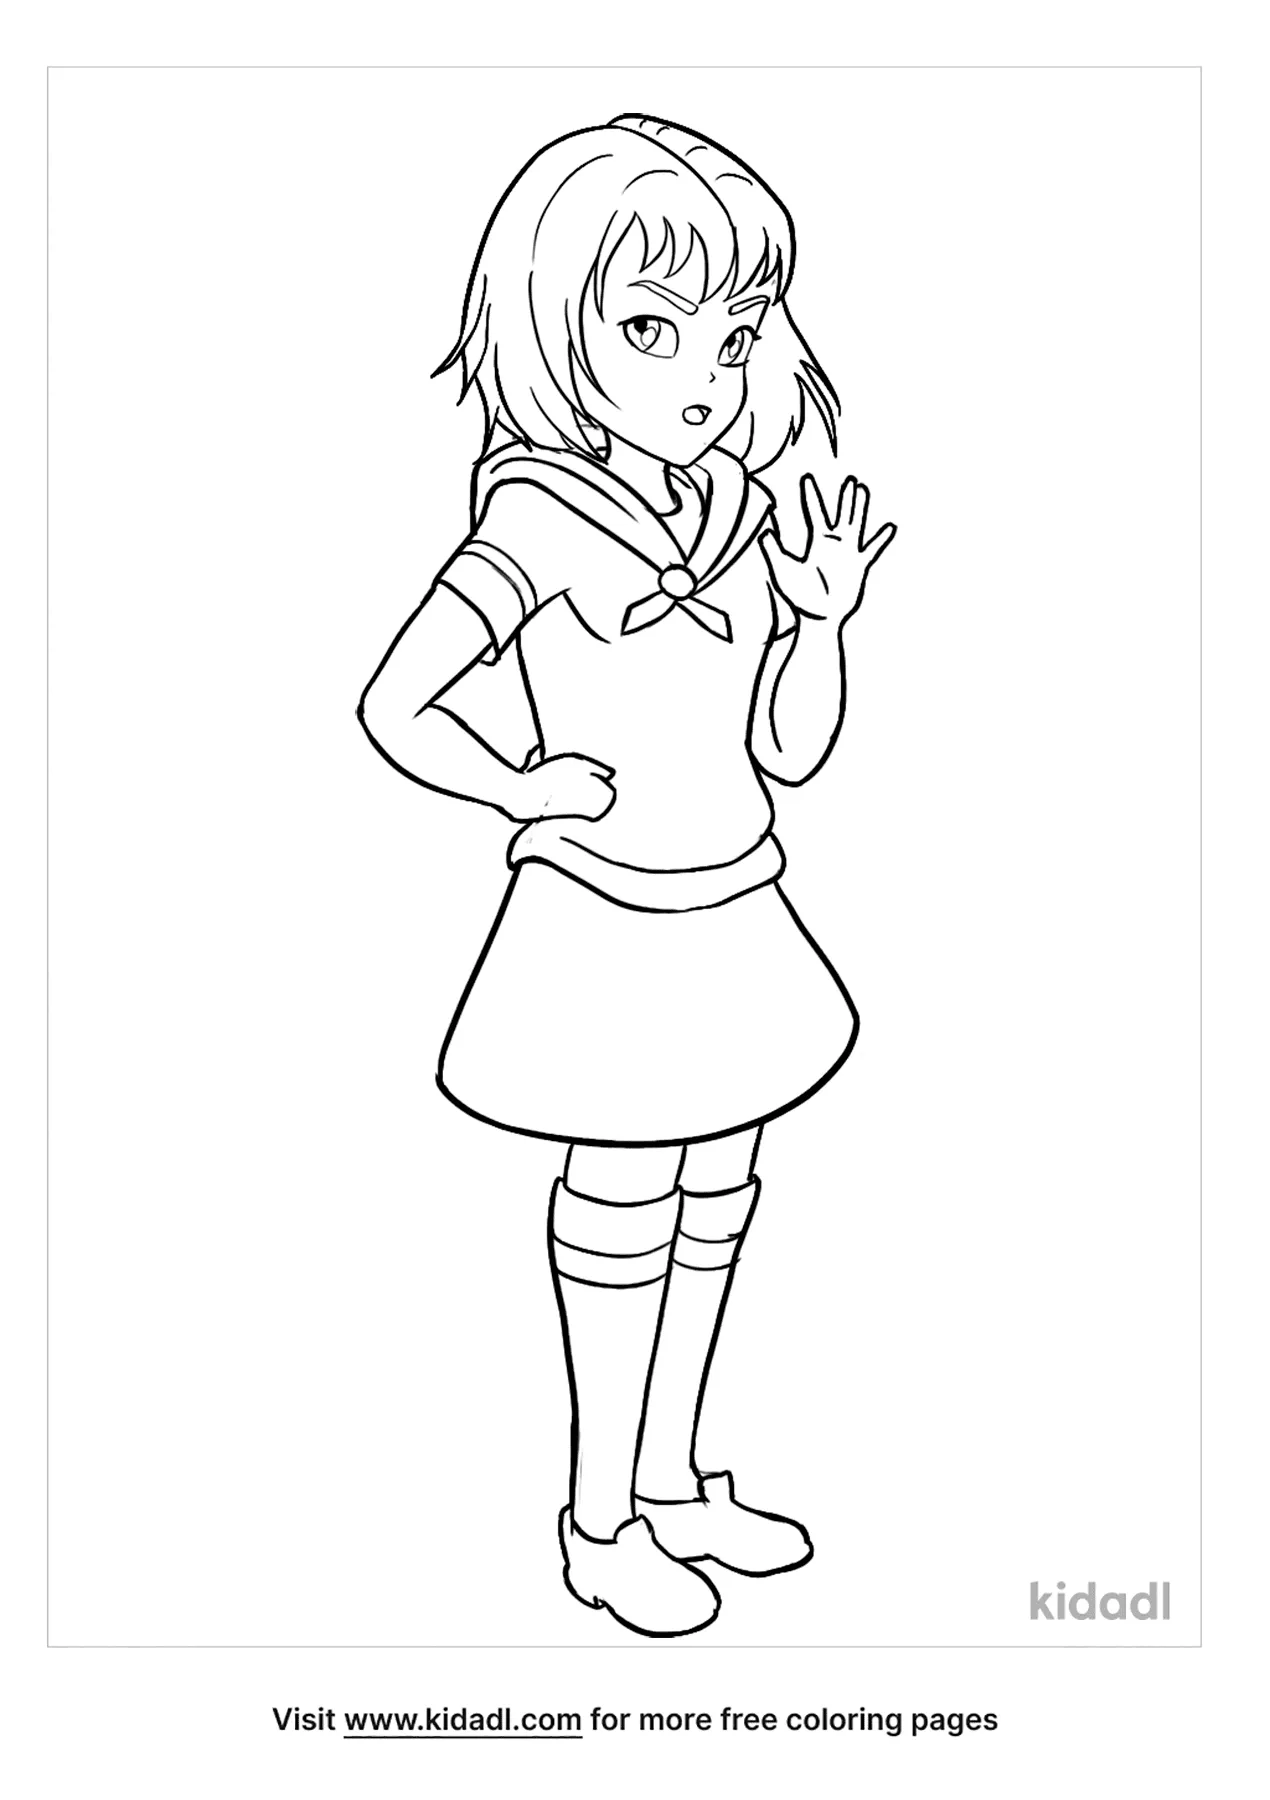 Free Anime Girl Coloring Page | Coloring Page Printables | Kidadl